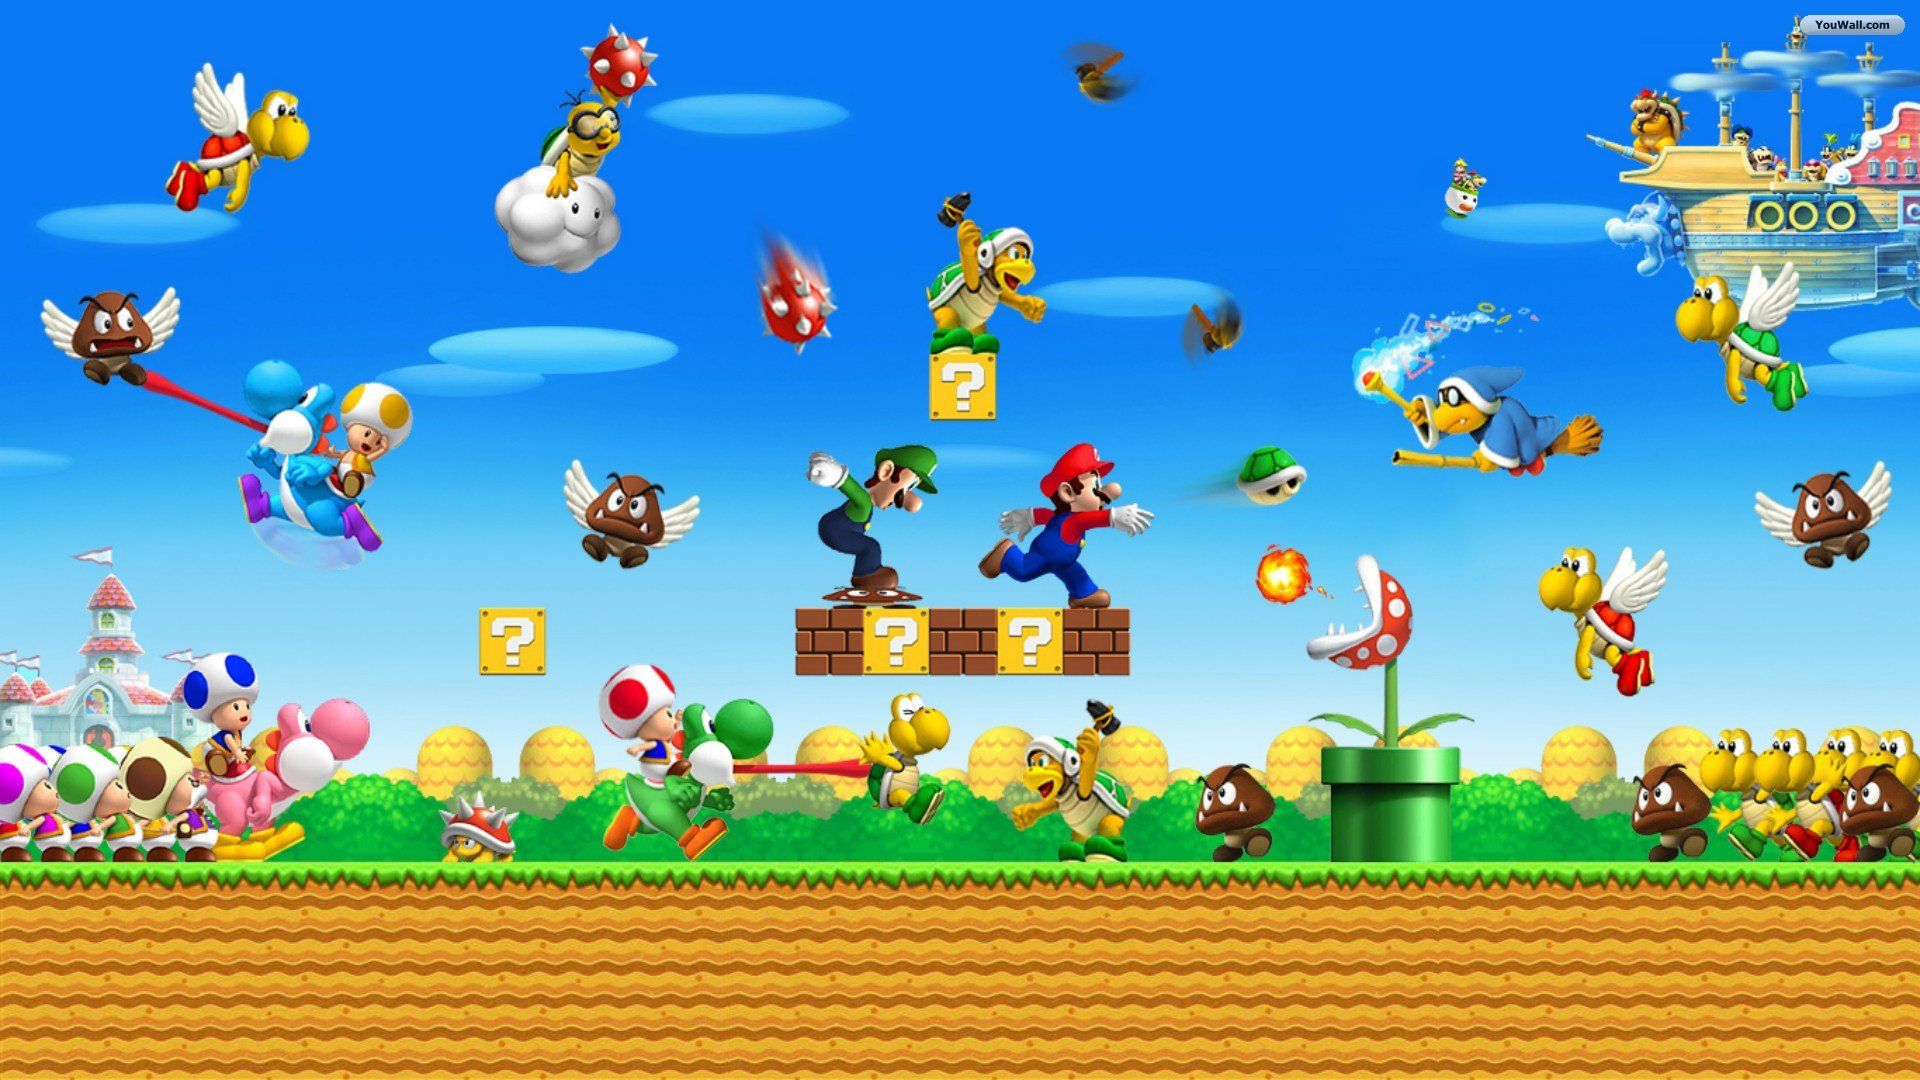 YouWall - Super Mario World Wallpaper - wallpaper,wallpapers,free ...